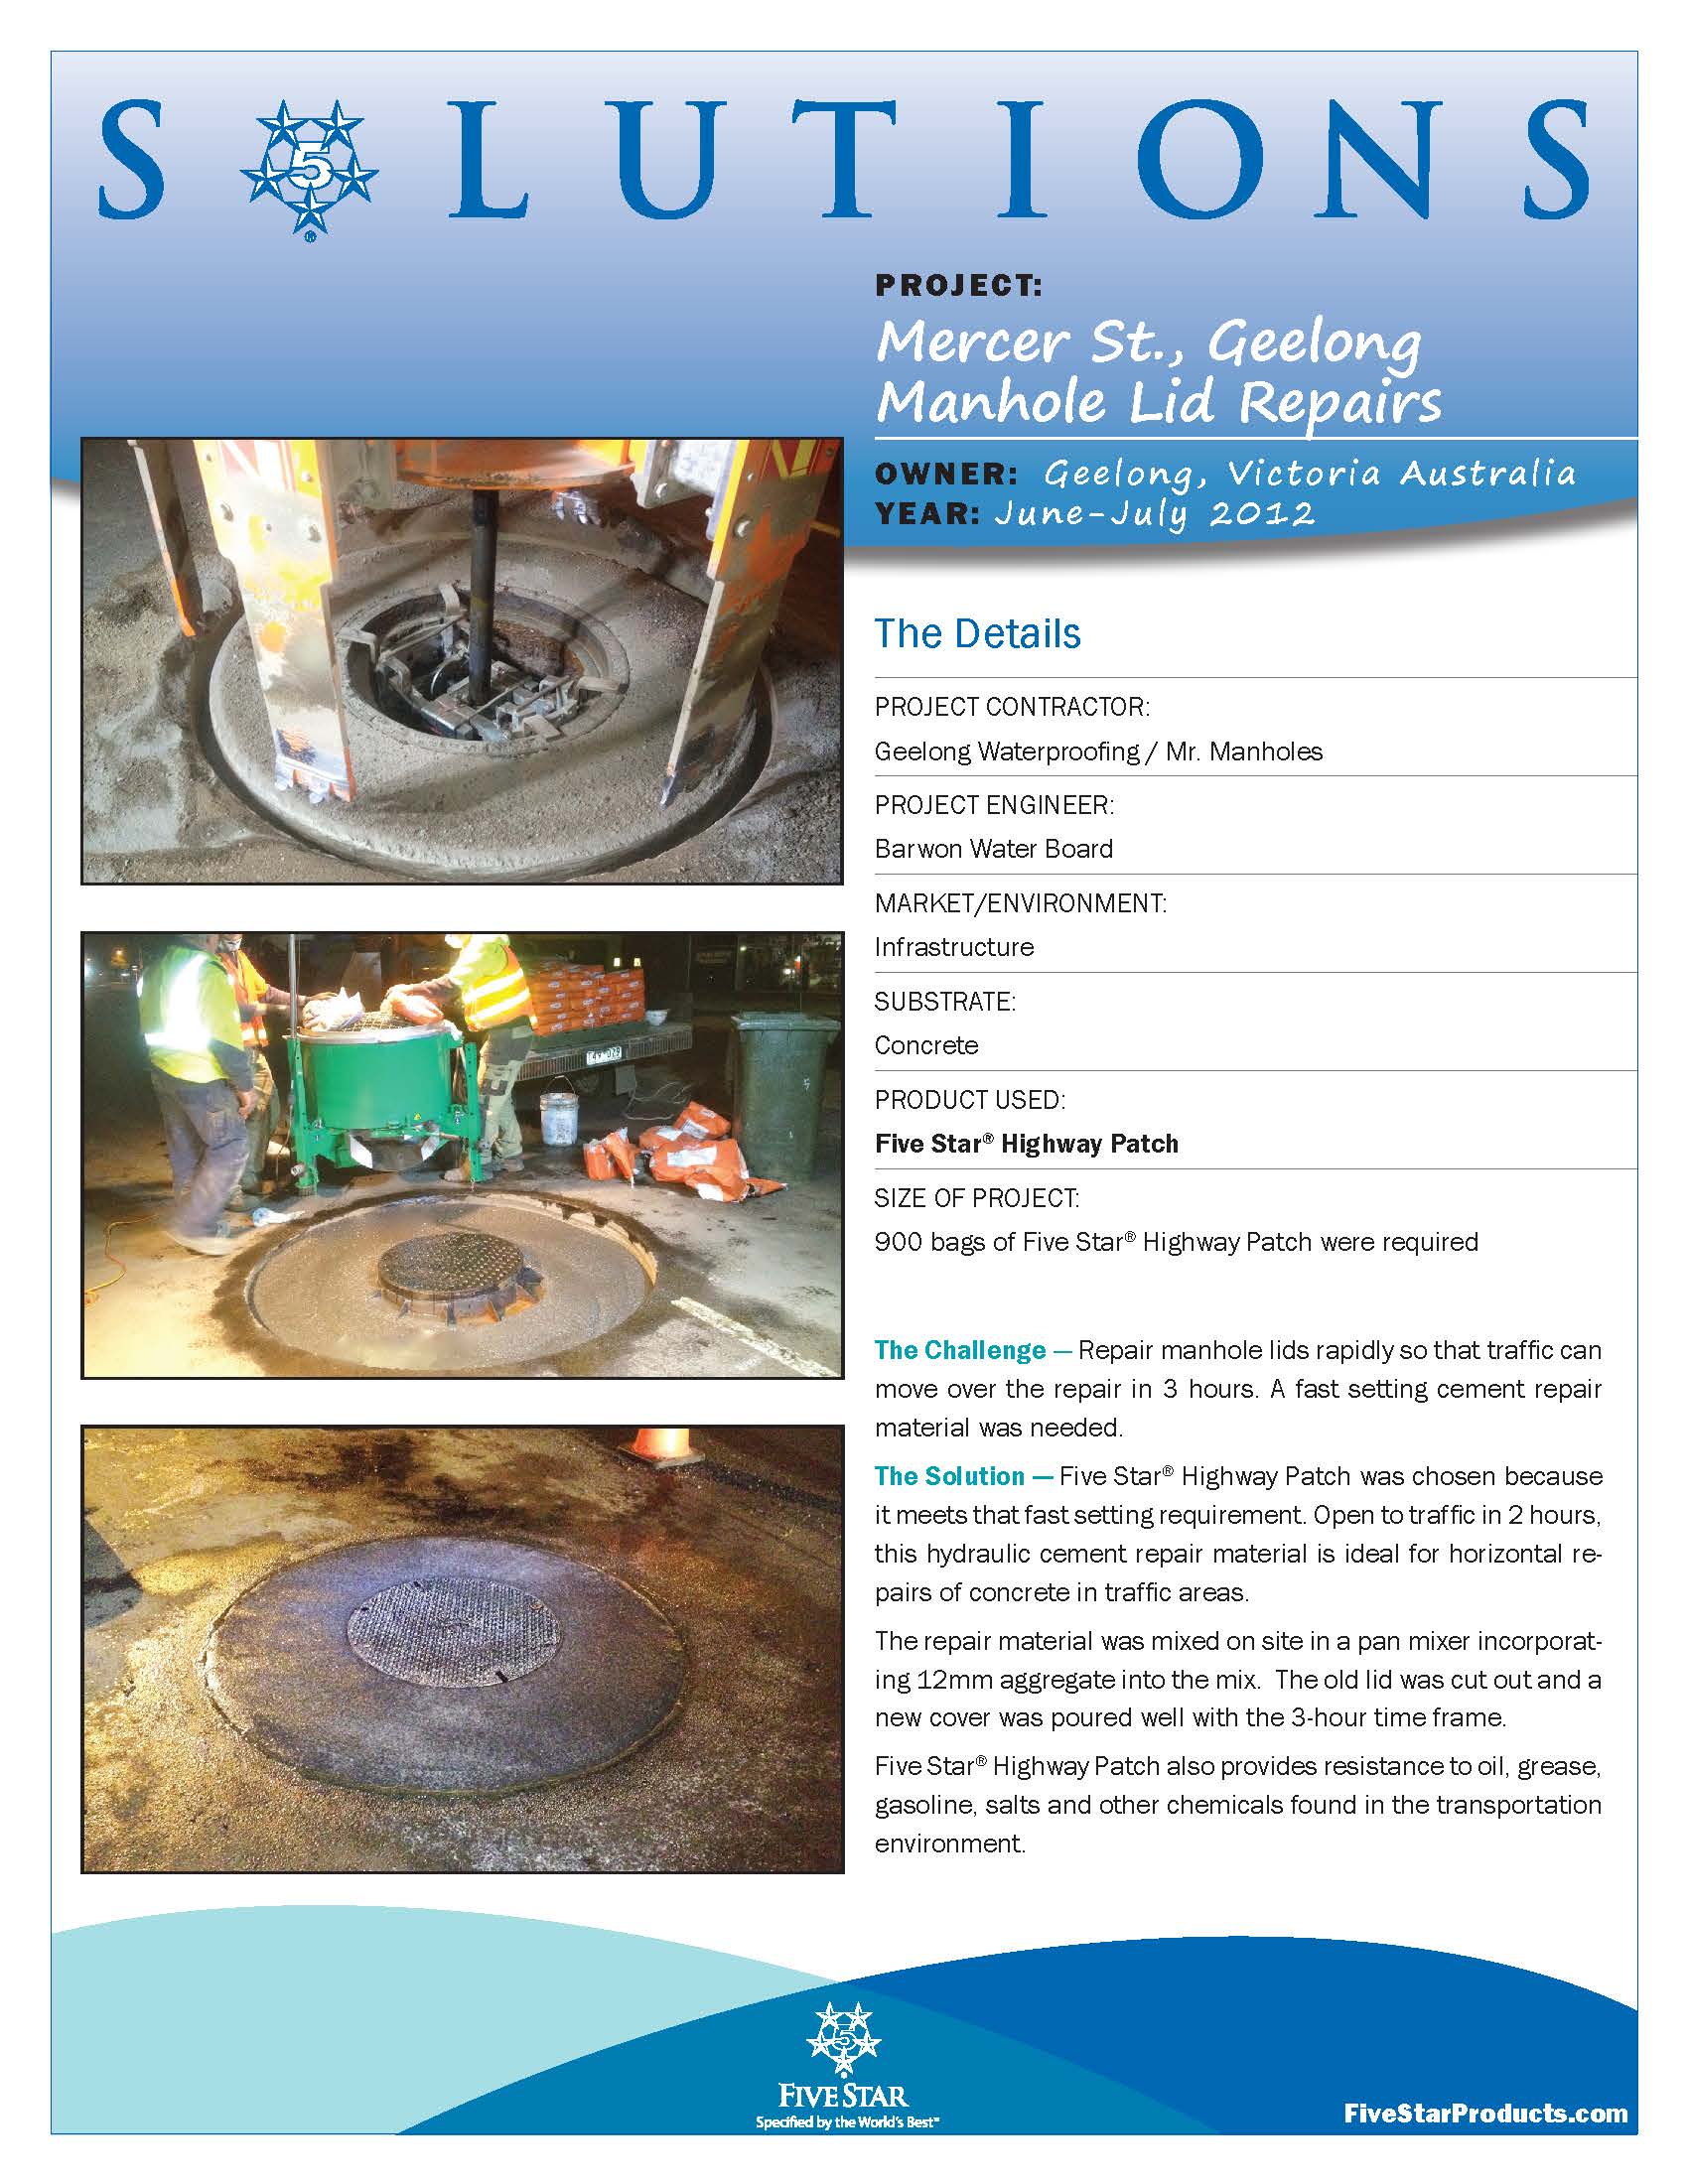 Case Study on Mercer St, Geelong Manhole Lid Repair, Geelong, Victoria Australia